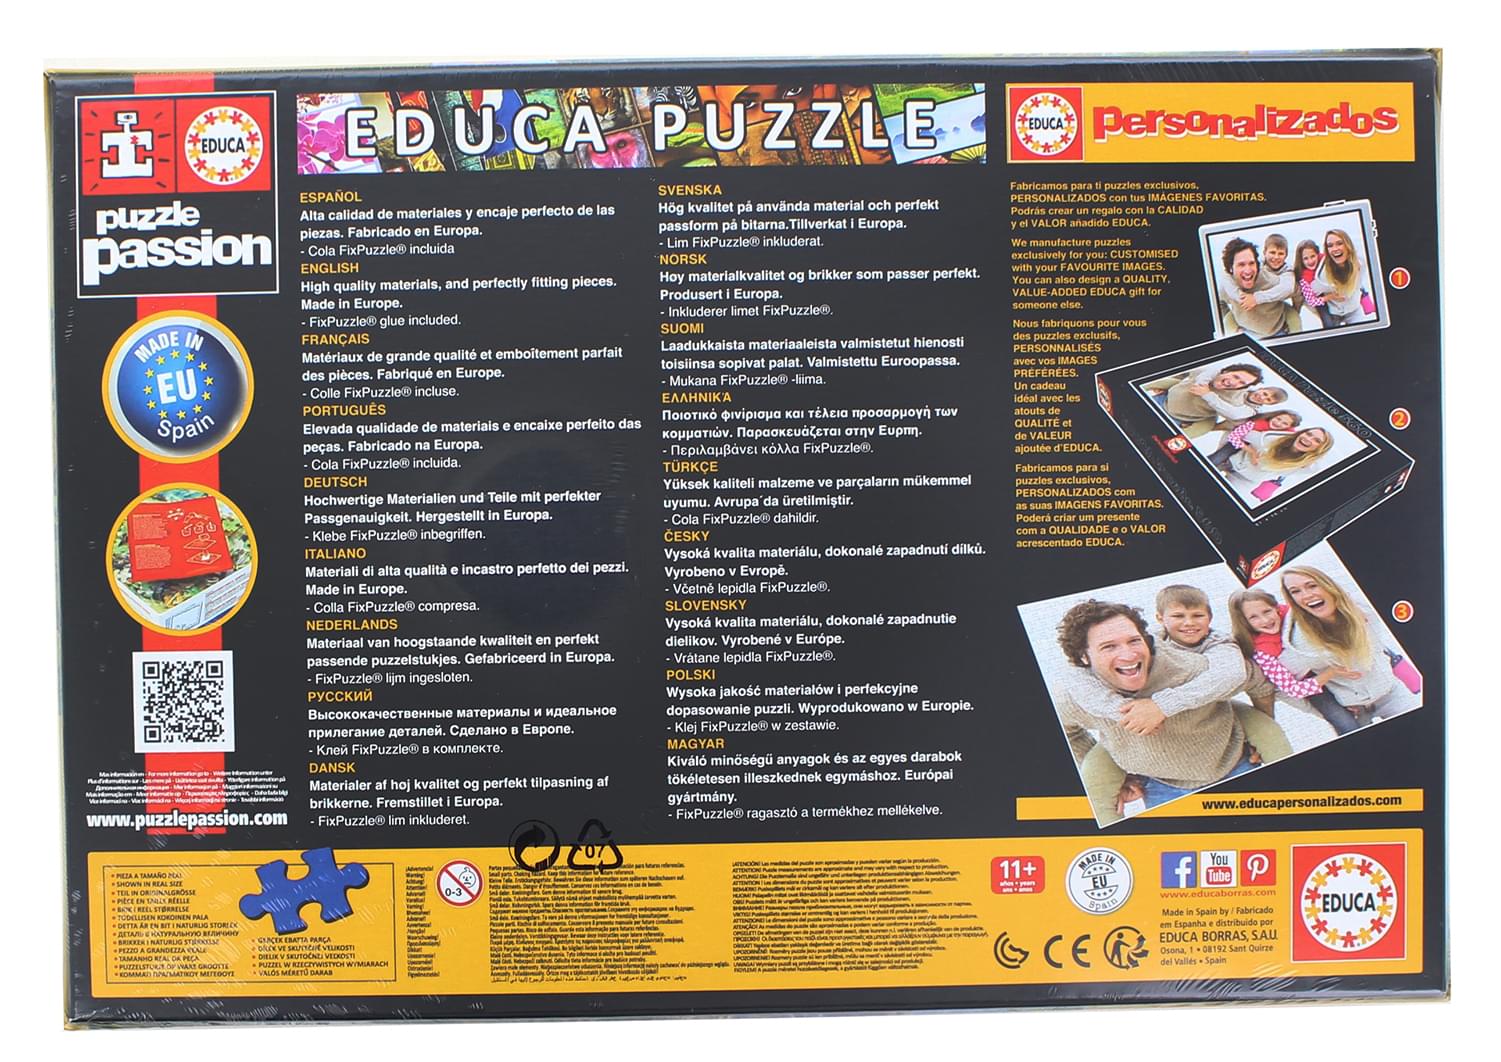 Educa Borrás - Puzzle 1000 Peças - Foto de Turma, Toys R' Us